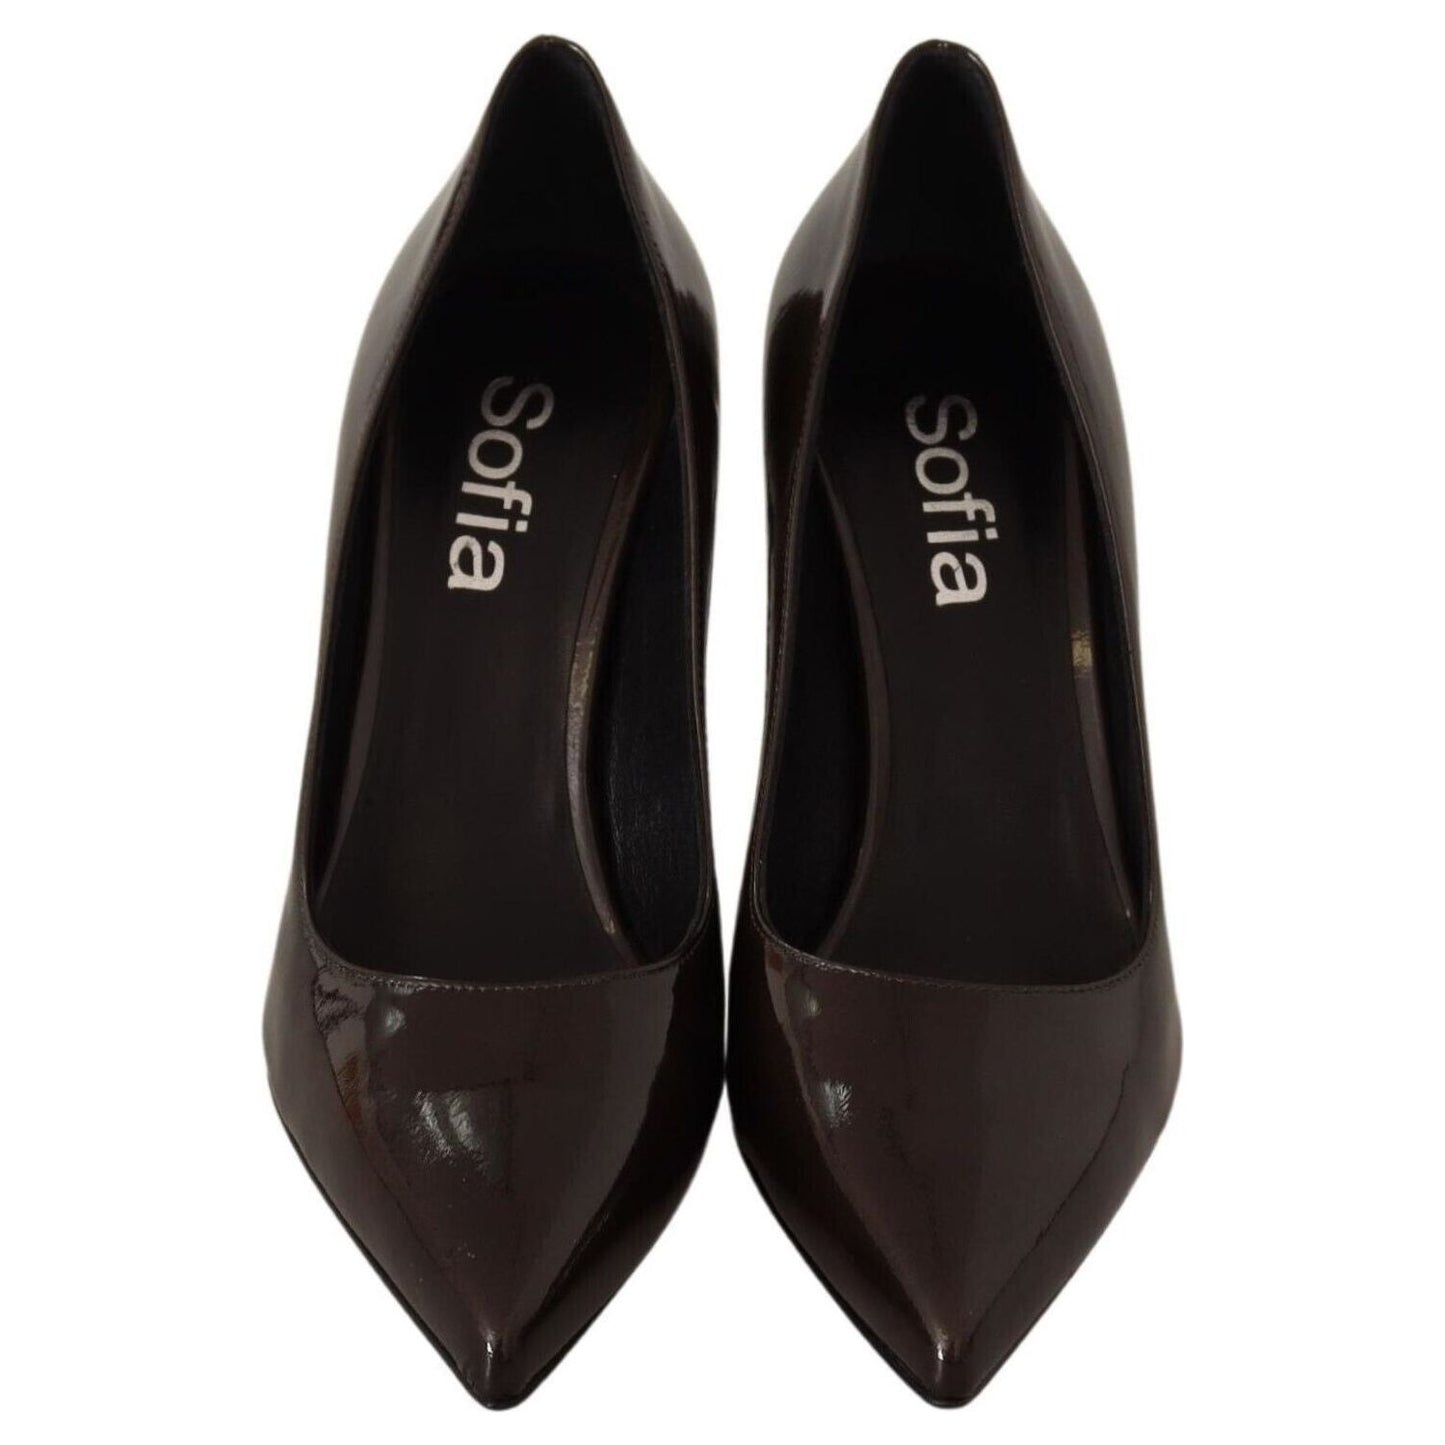 Sofia Elegant Brown Leather Heels Pumps WOMAN PUMPS brown-patent-leather-stiletto-heels-pumps-shoes